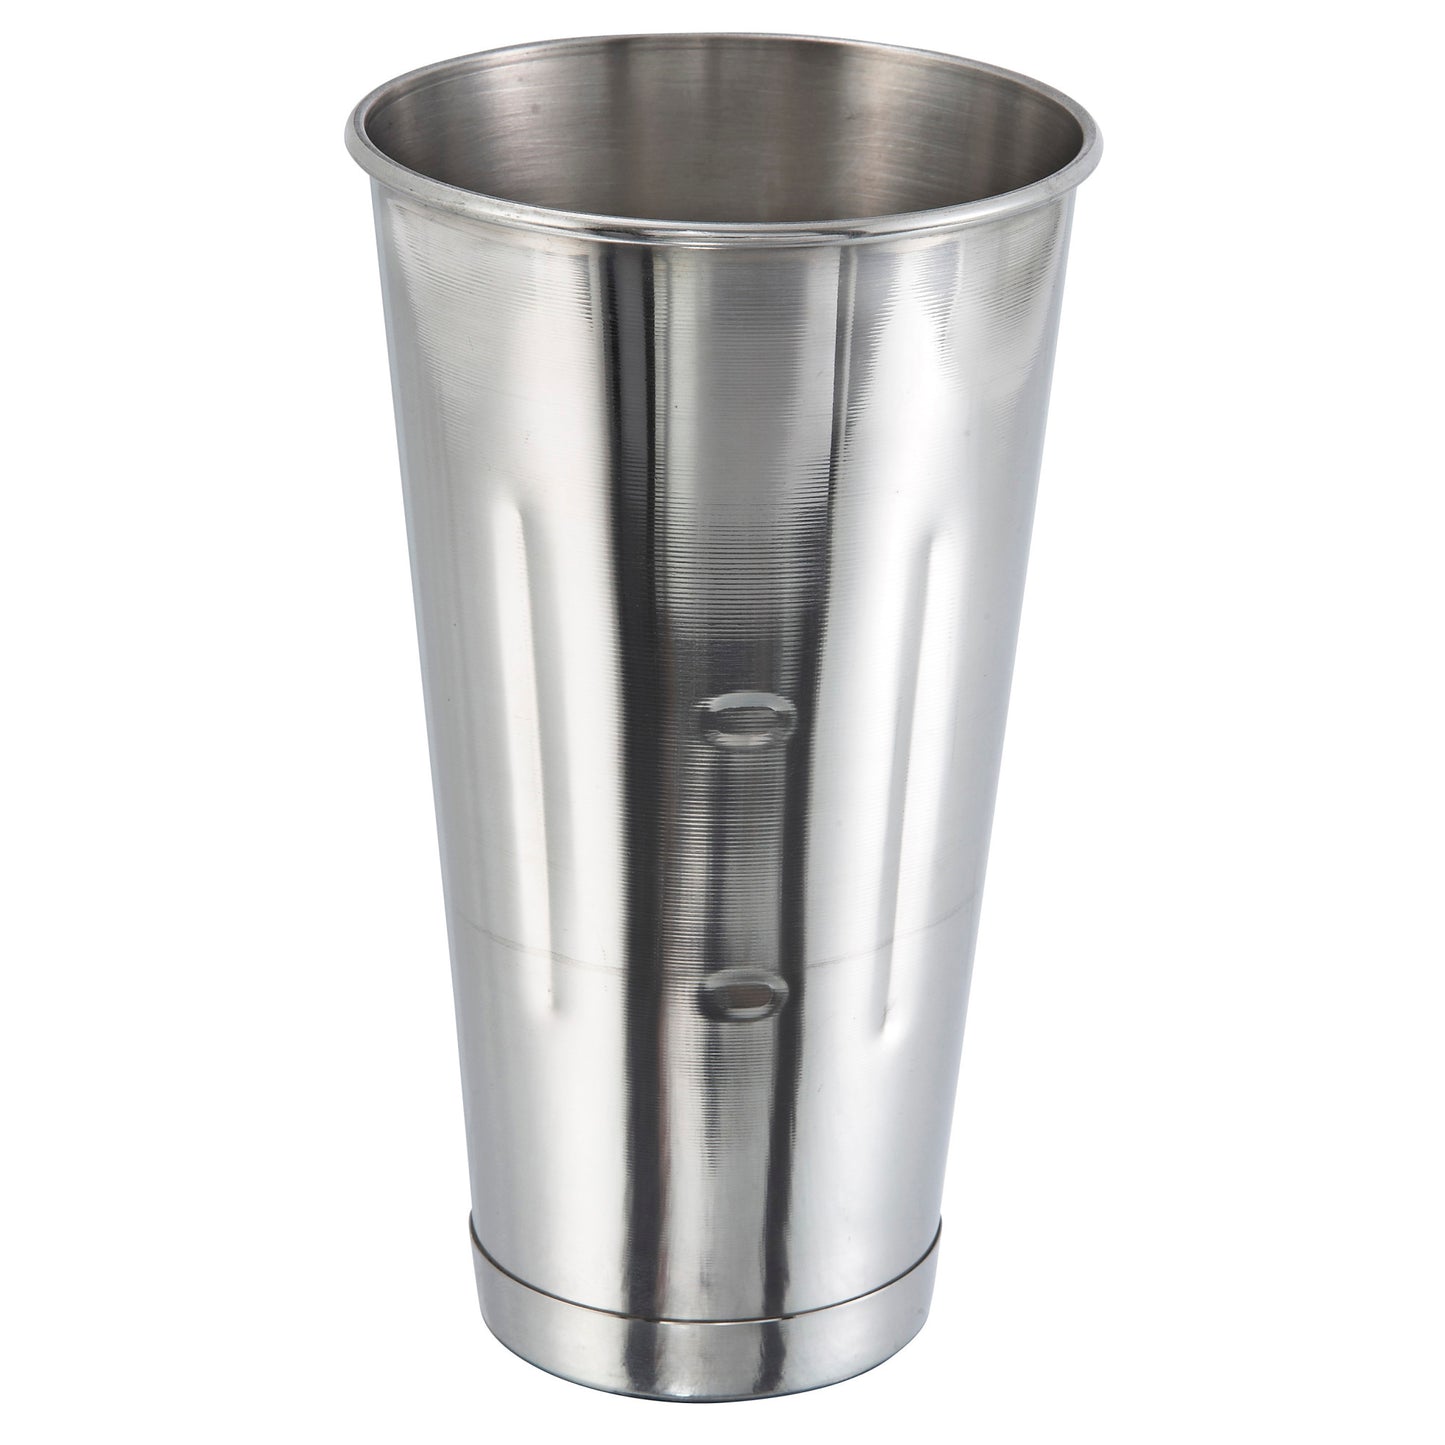 MCP-30 - 30 oz Malt Cup, Stainless Steel